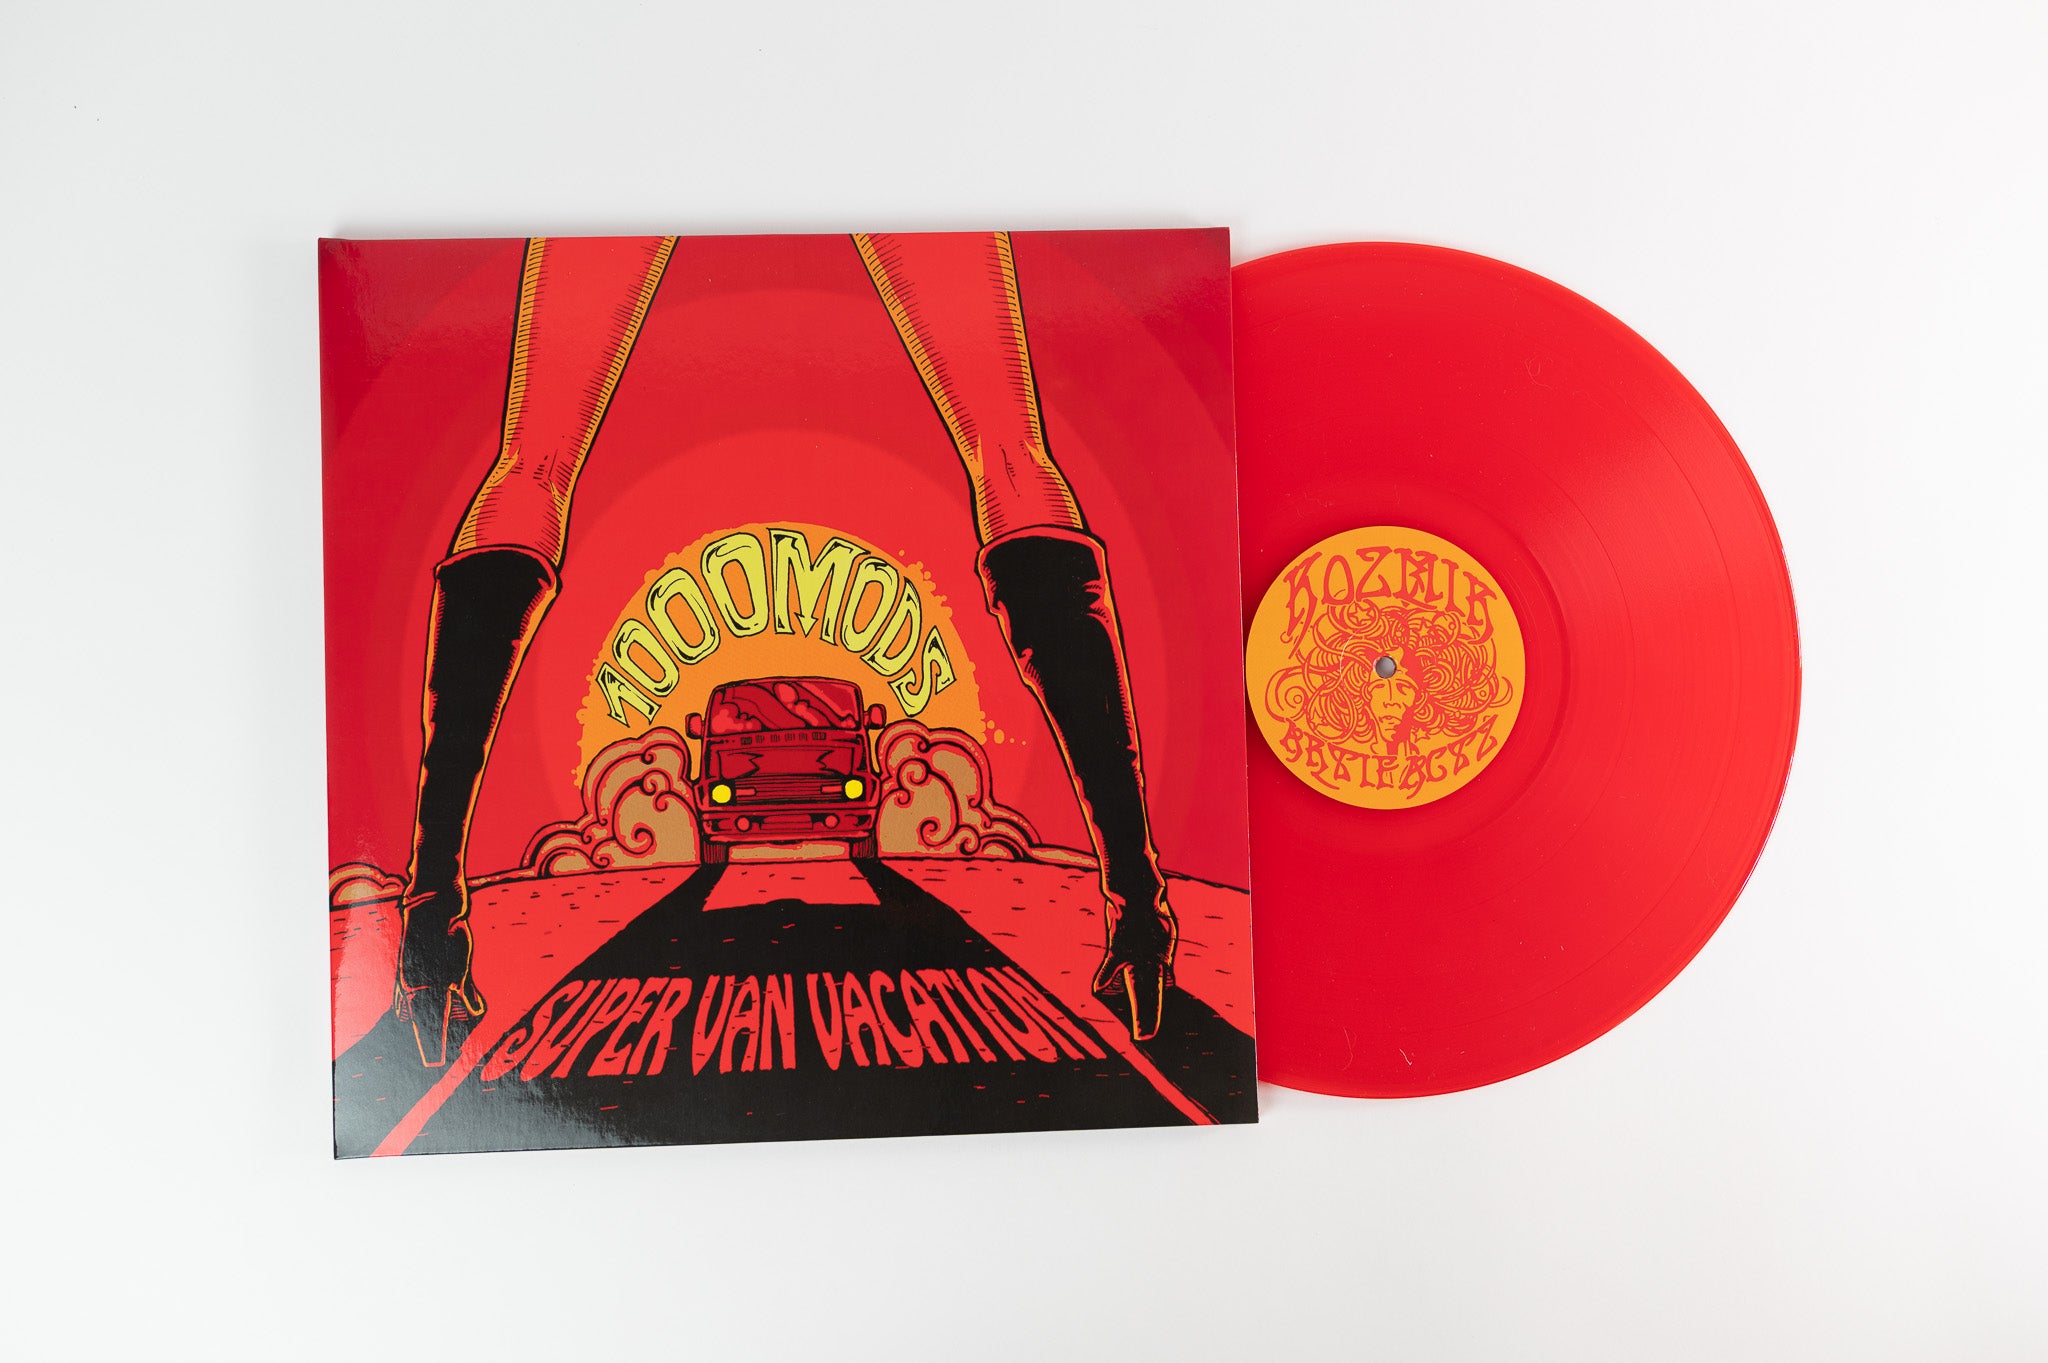 1000mods - Super Van Vacation on Kozmik Artifactz Limited Red Vinyl